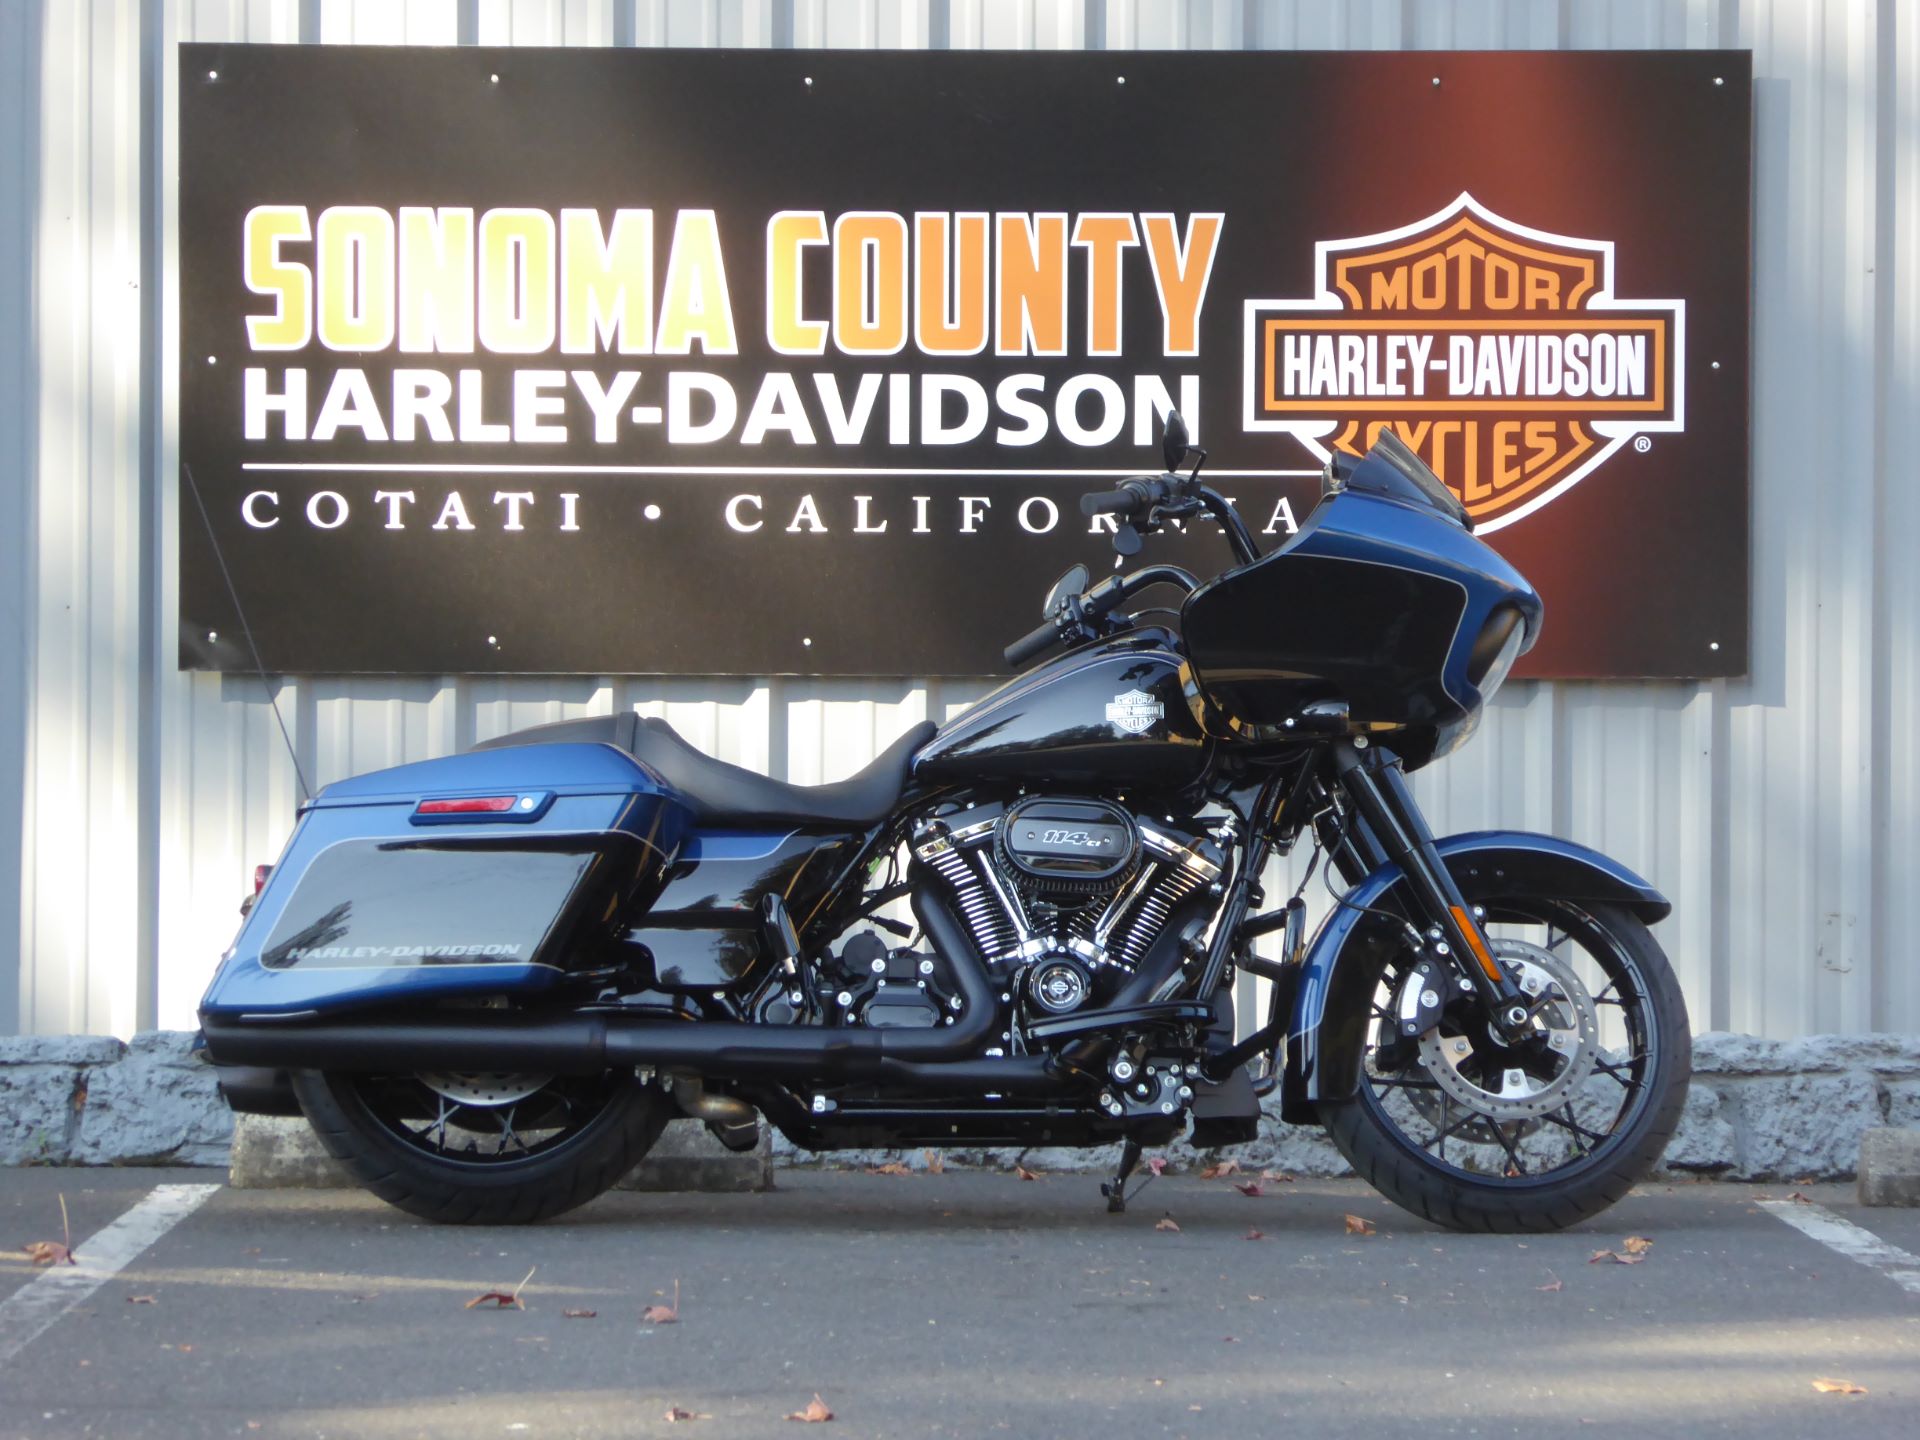 2022 Harley-Davidson Road Glide® Special in Cotati, California - Photo 1